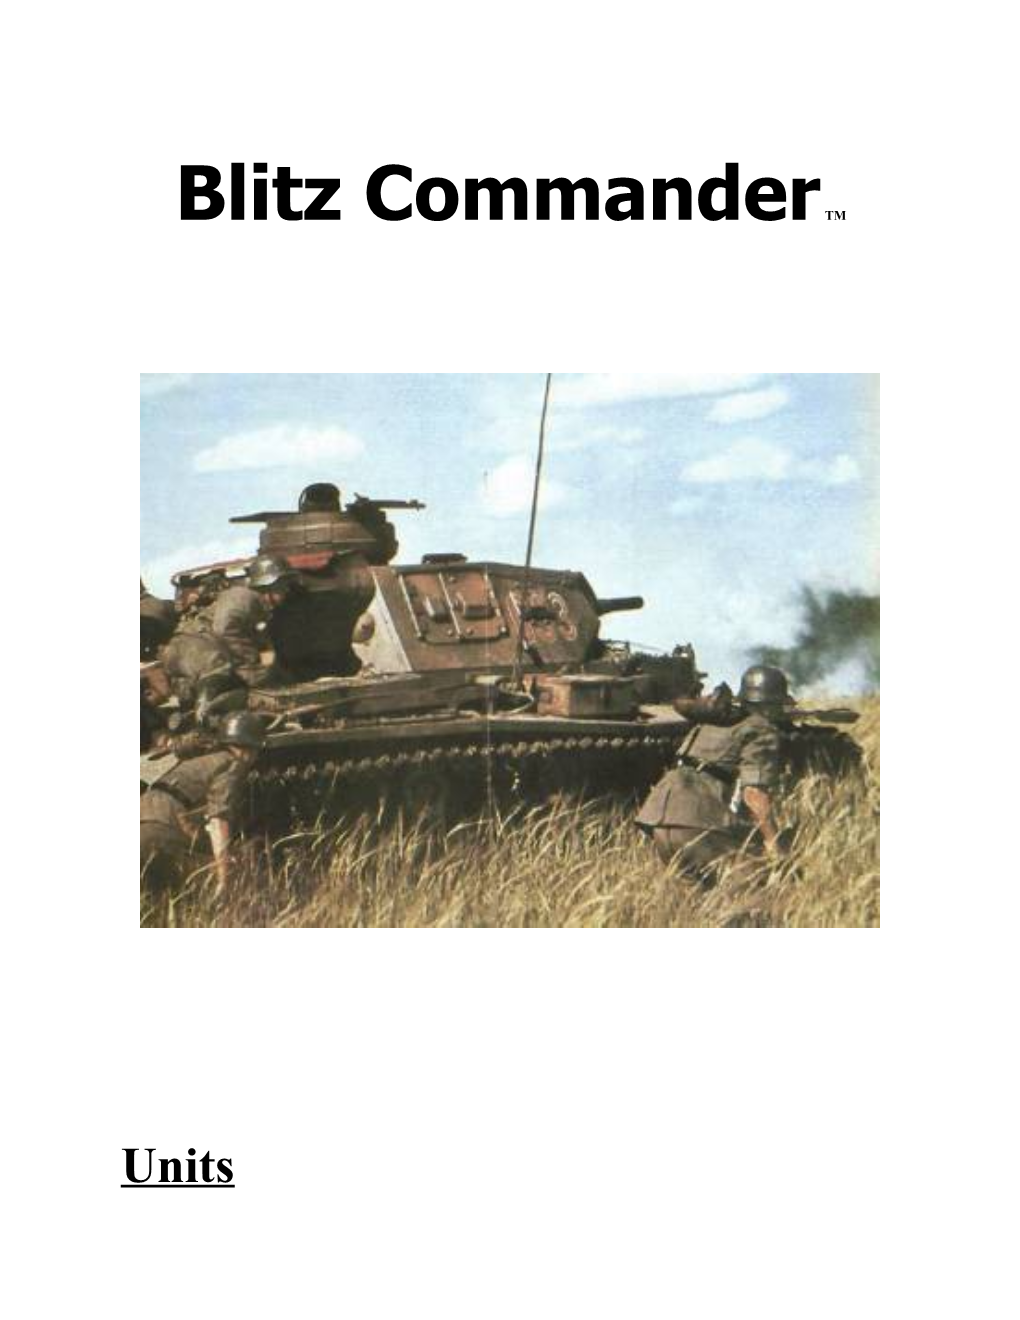 Blitz Commandertm